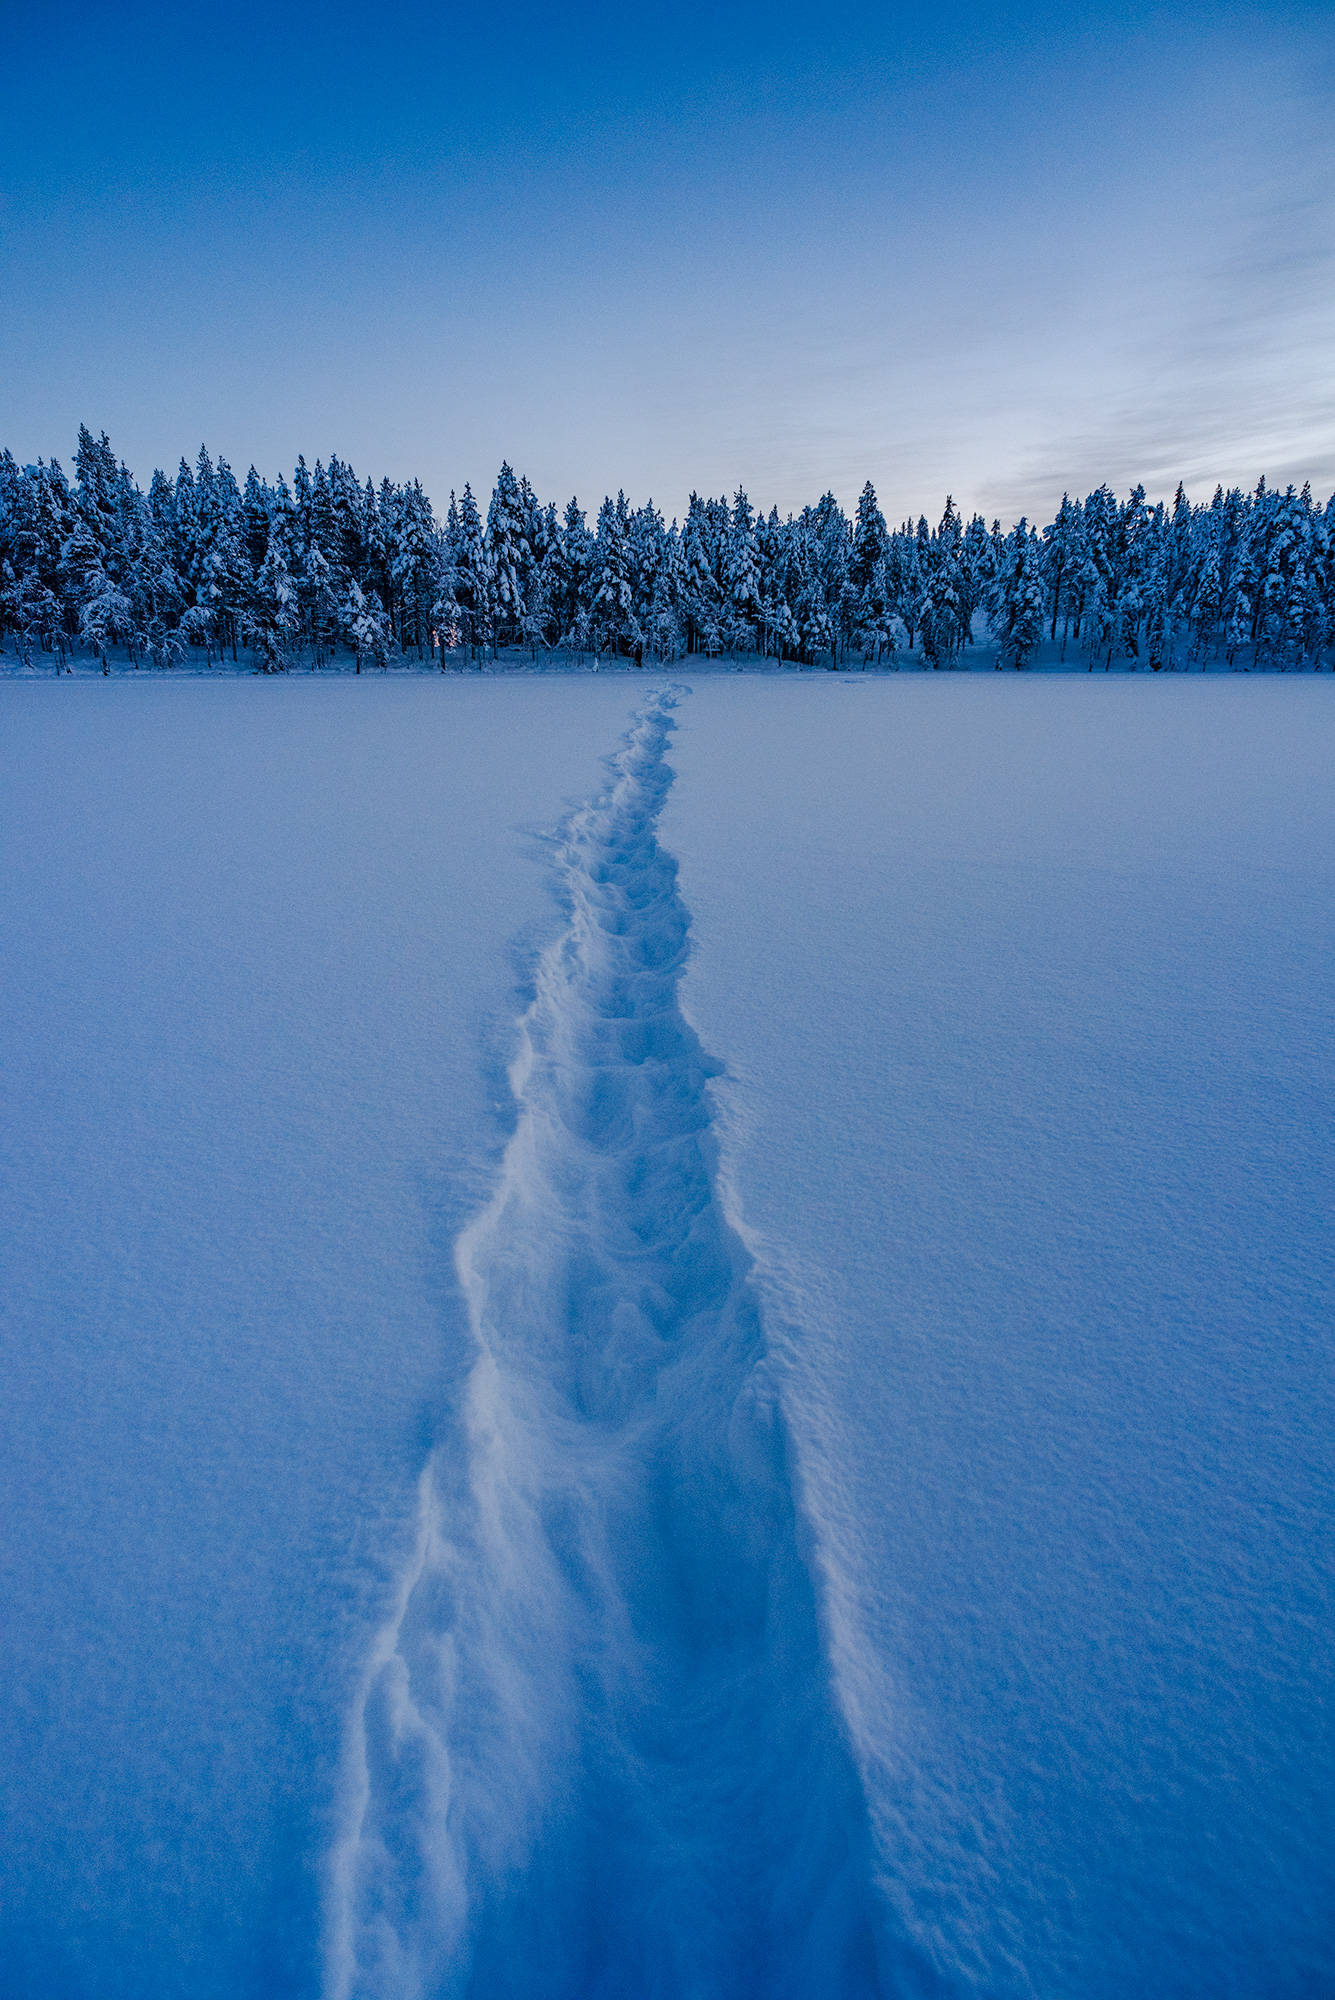 Lapland forest in winter at sunset, taken by landscape photographer Jennifer Esseiva.